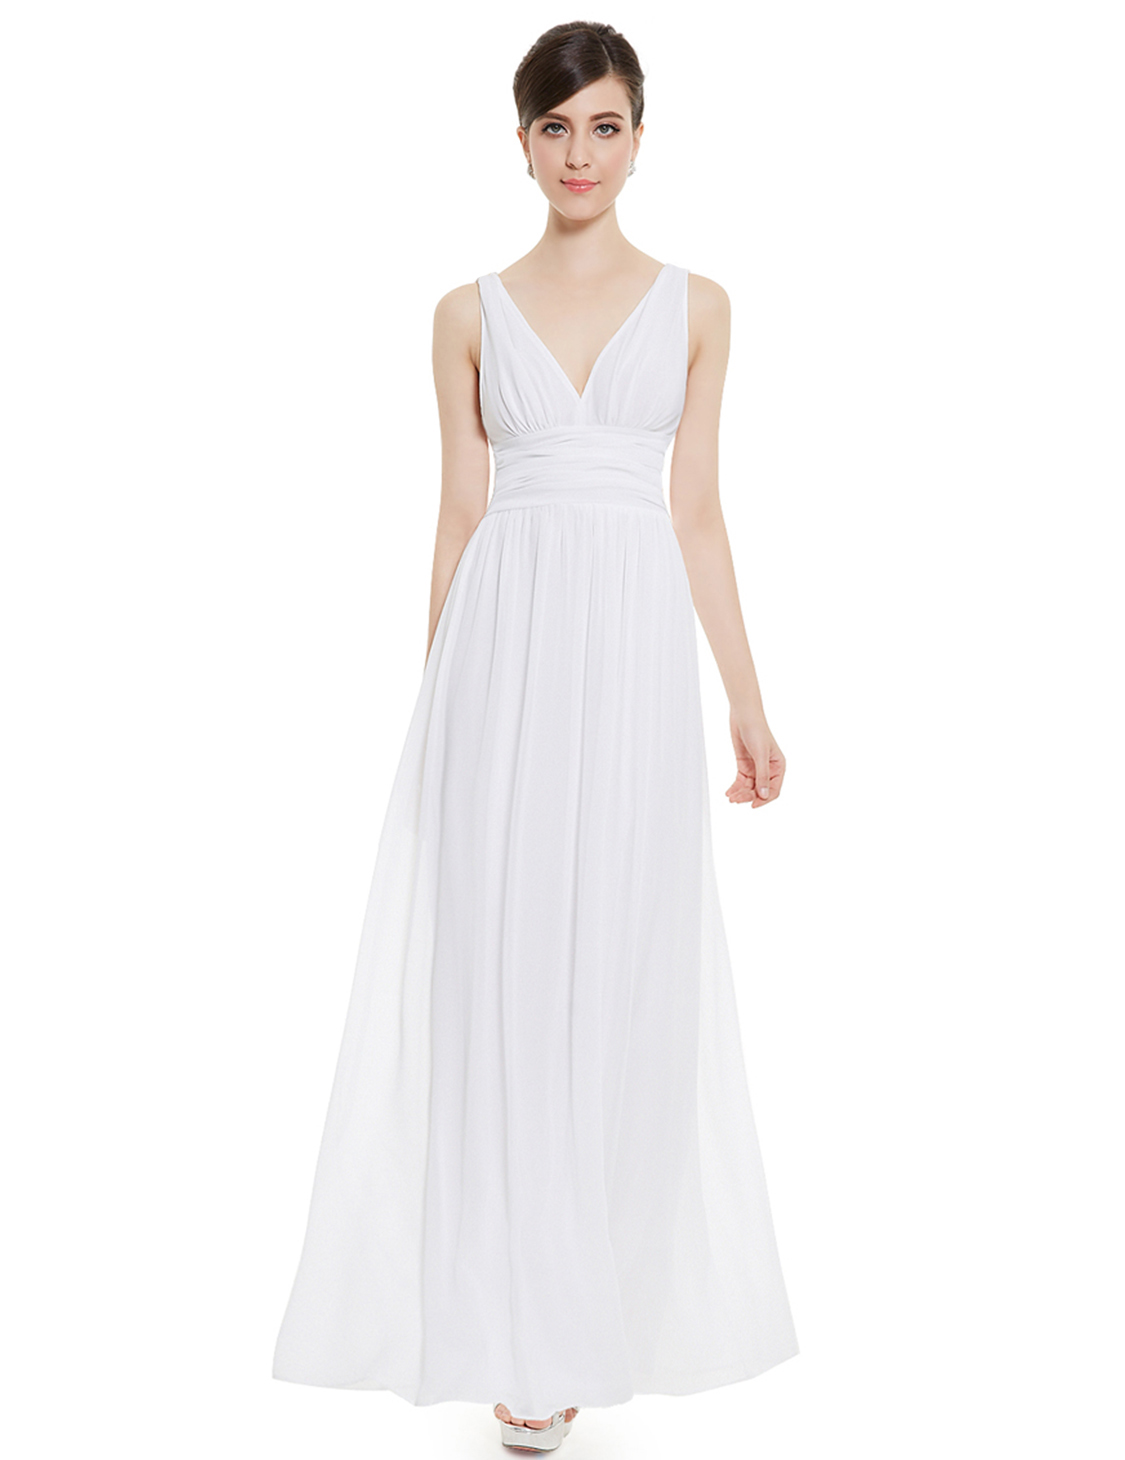 New Elegant Whites Chiffon V neck Diamante Pageant Gown Dress 09016WH 